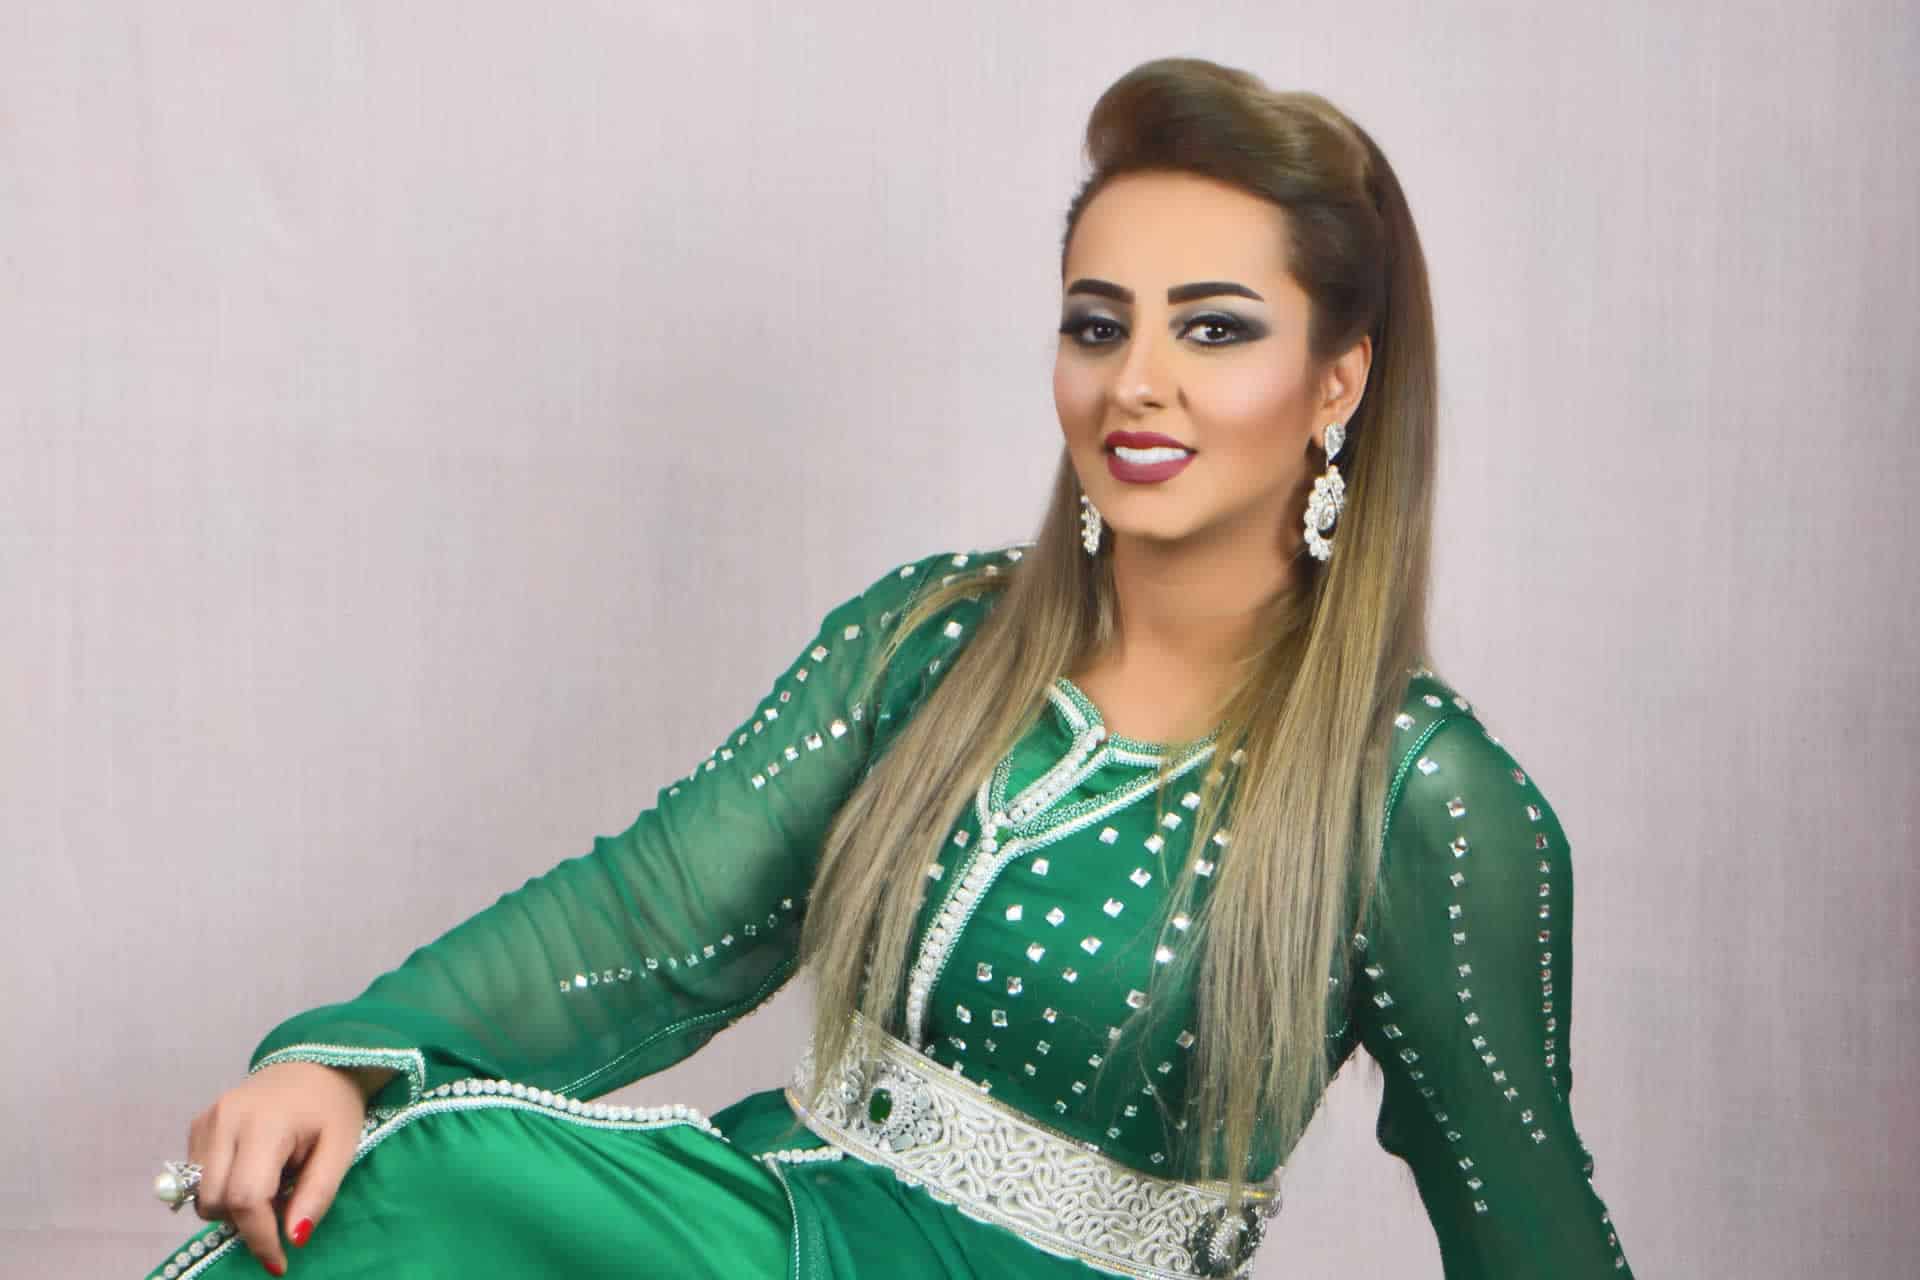 Zina Daoudia